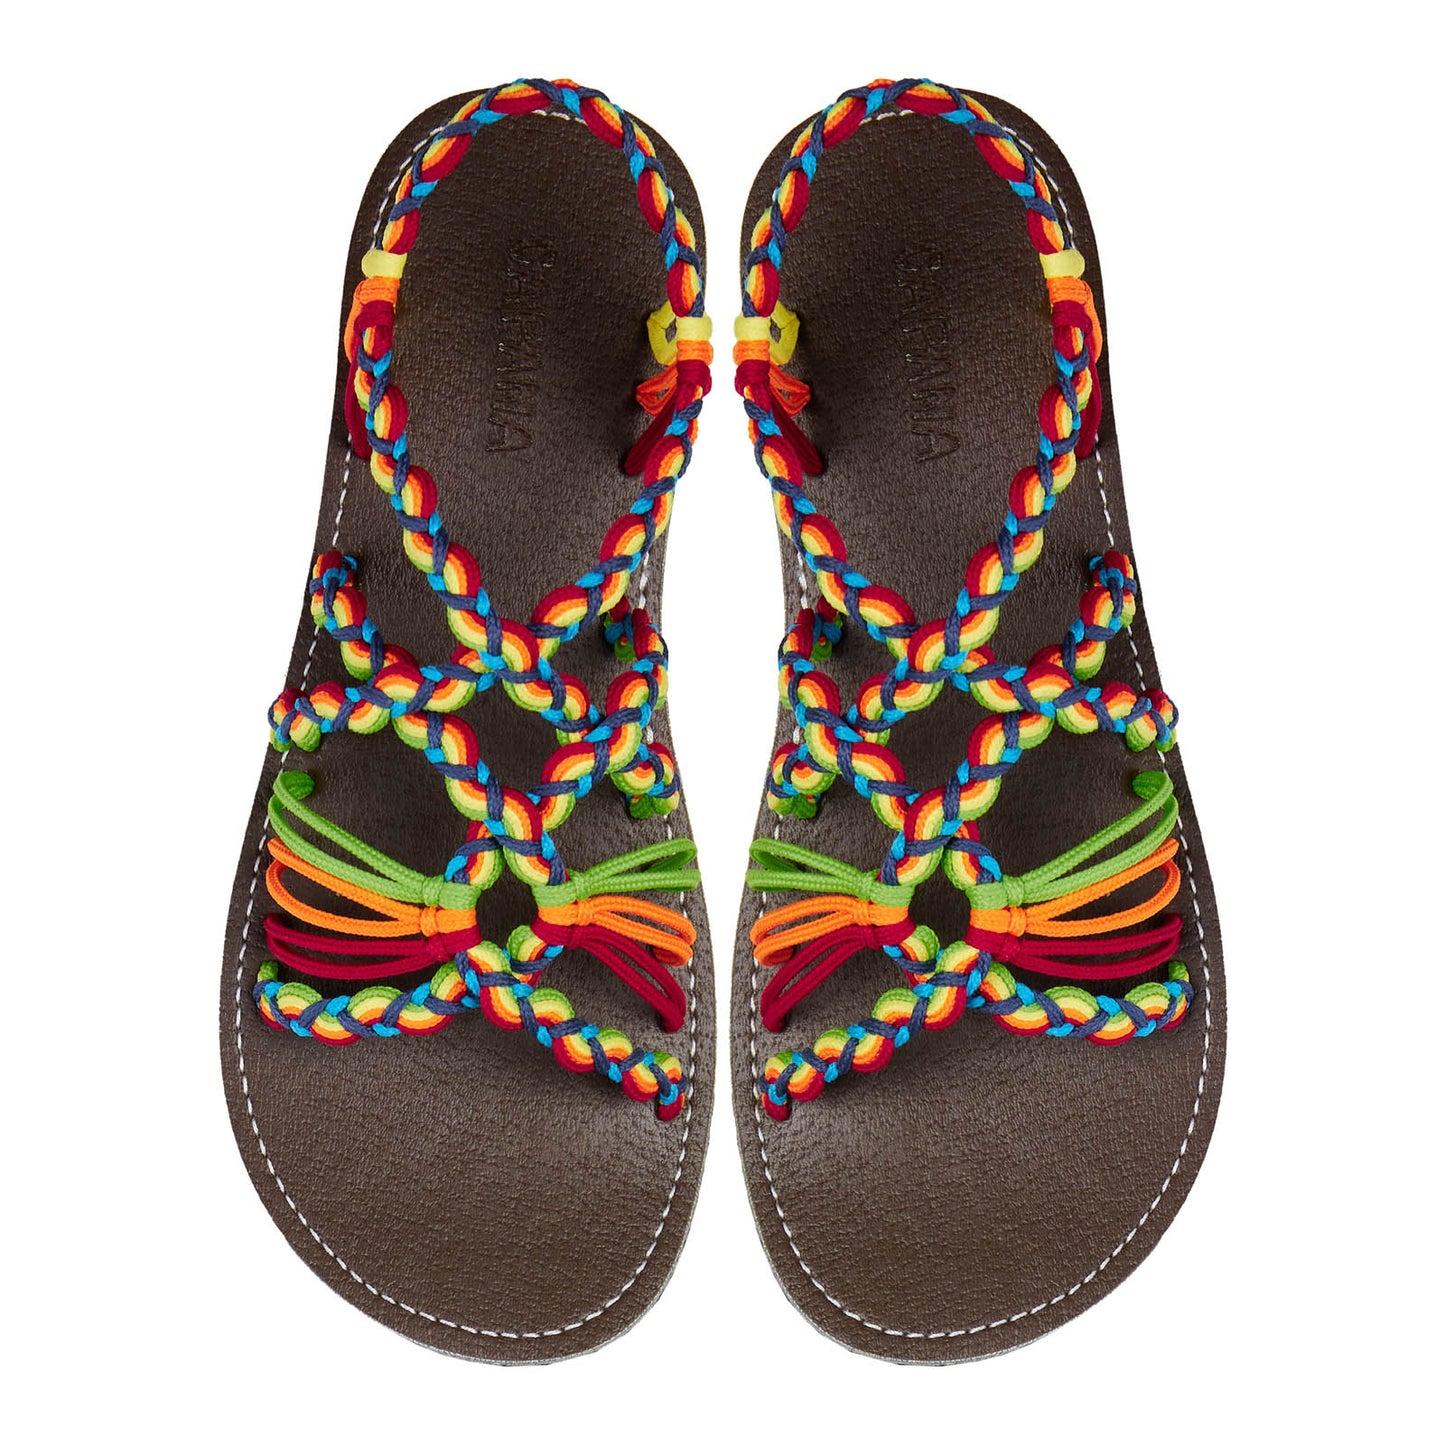 Relax Festive Rope Sandals Rainbow Open toe wider design Flat Handmade sandals for women